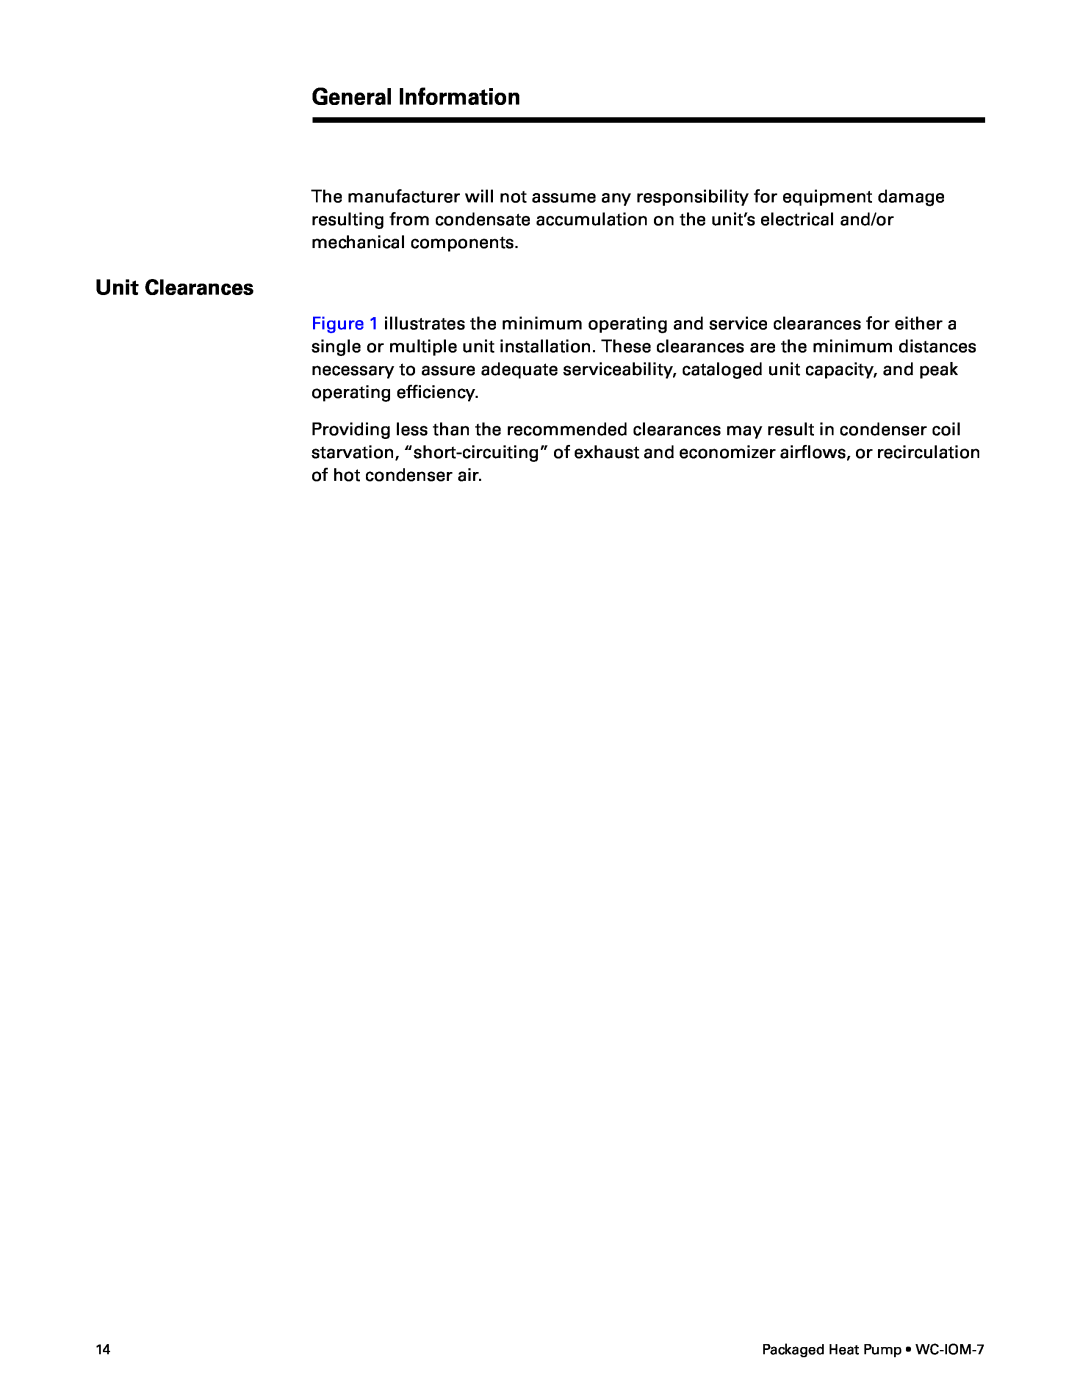 Trane WC-IOM-7 manual Unit Clearances, General Information 